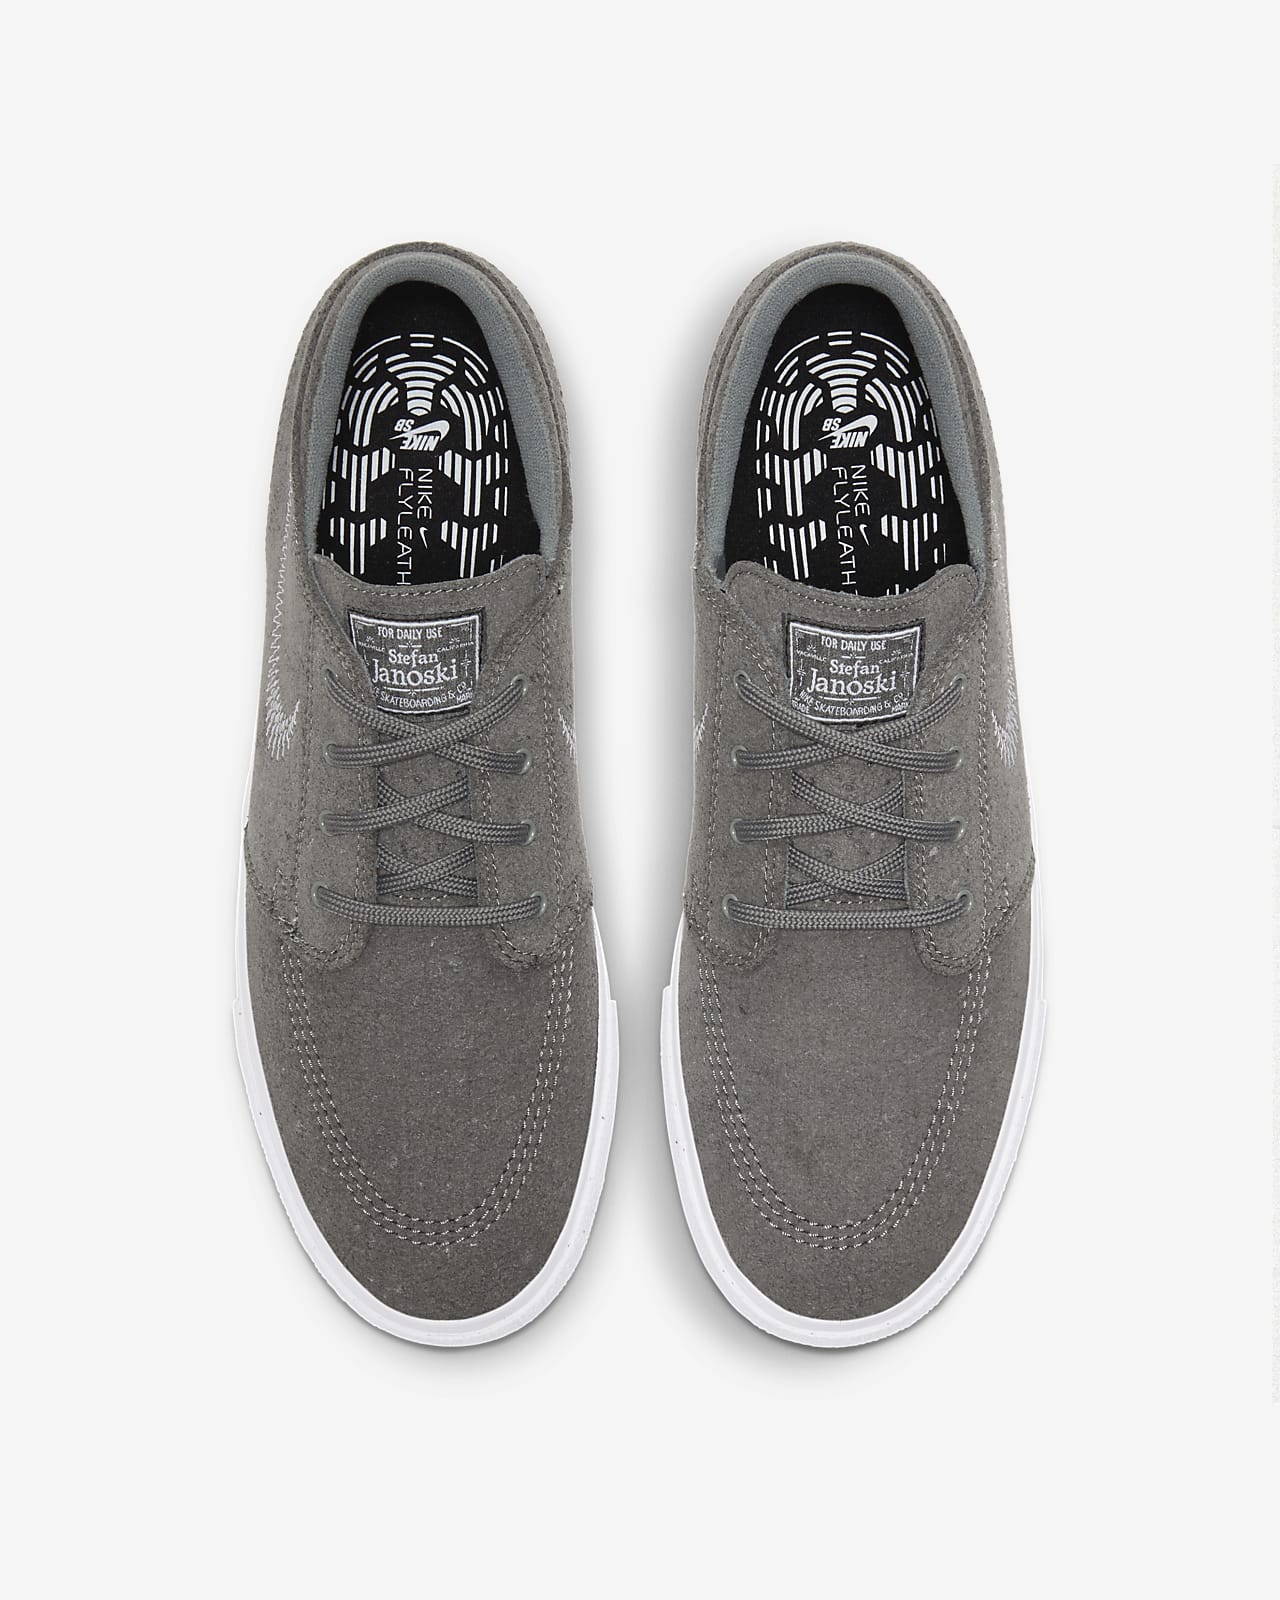 stefan janoski shoes grey